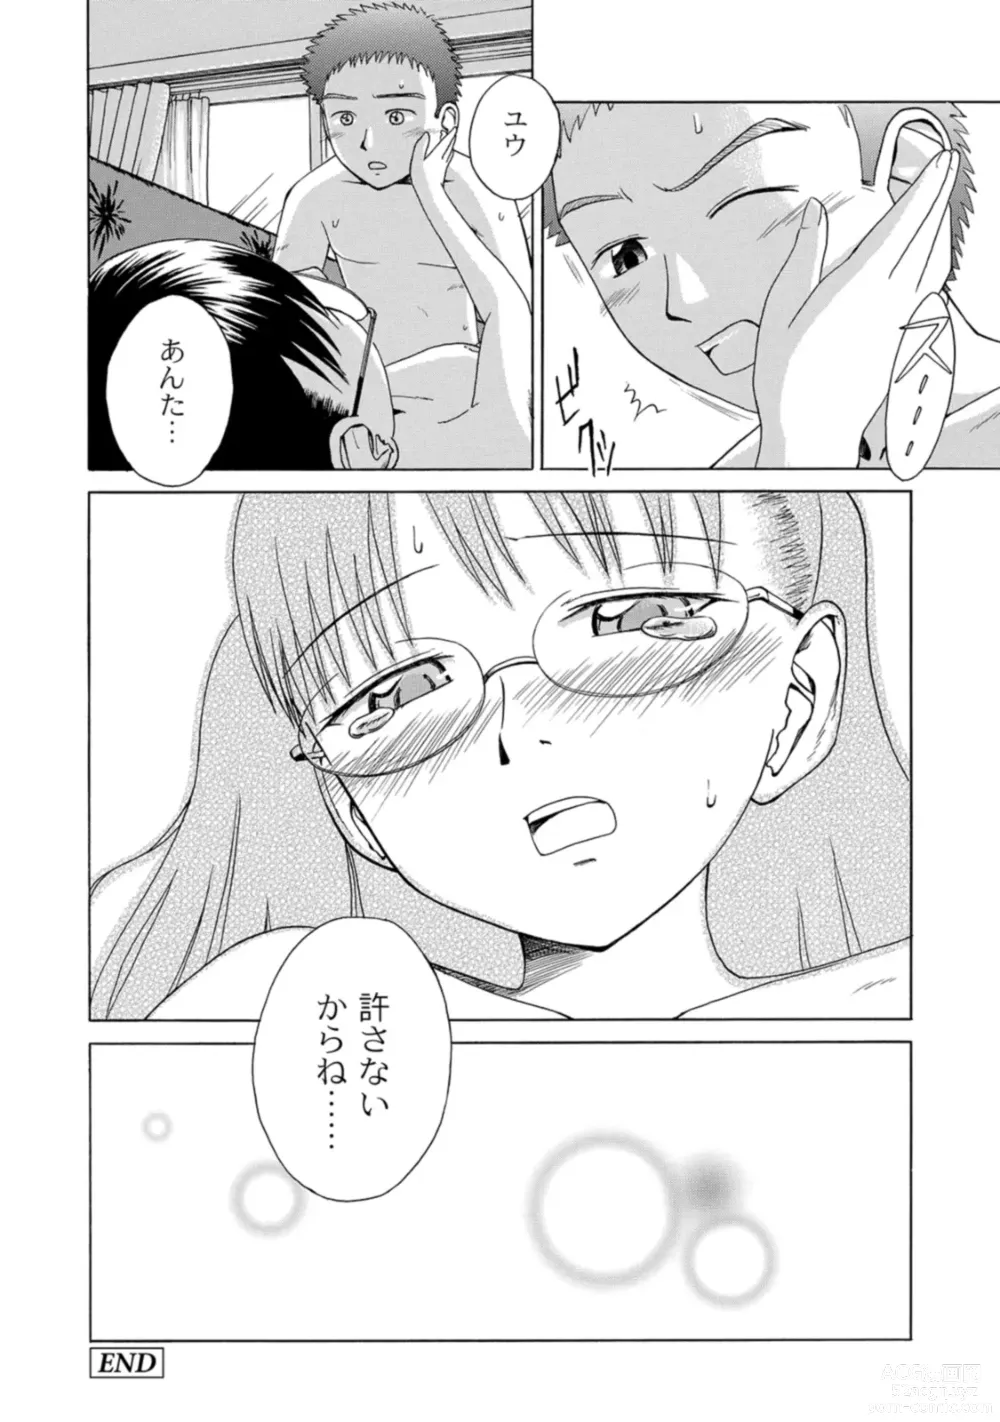 Page 180 of manga Jitsuane Soukan Root